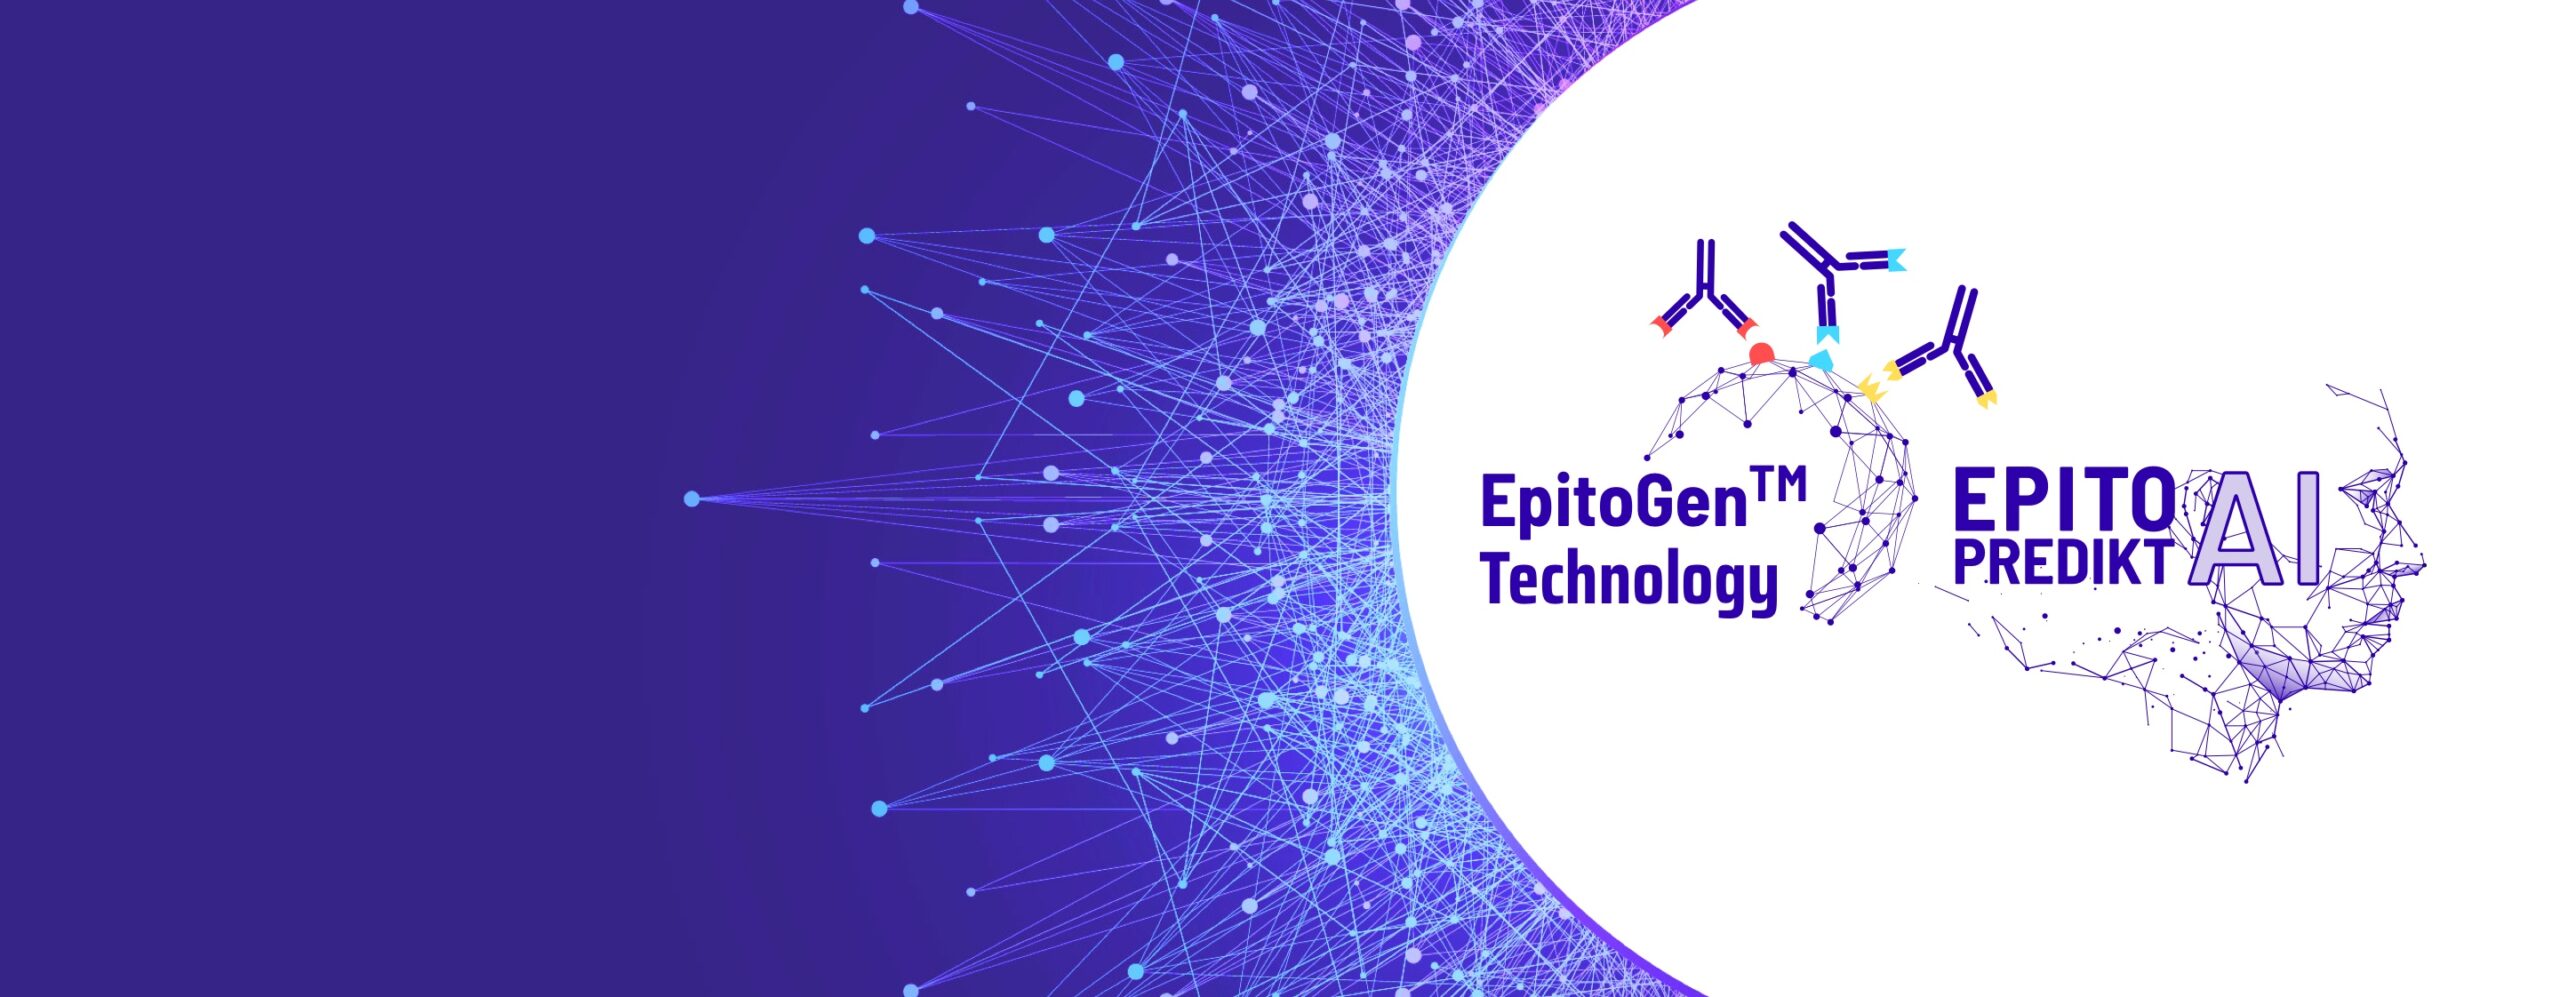 EpitogenX: embracing disruption through innovative technologies